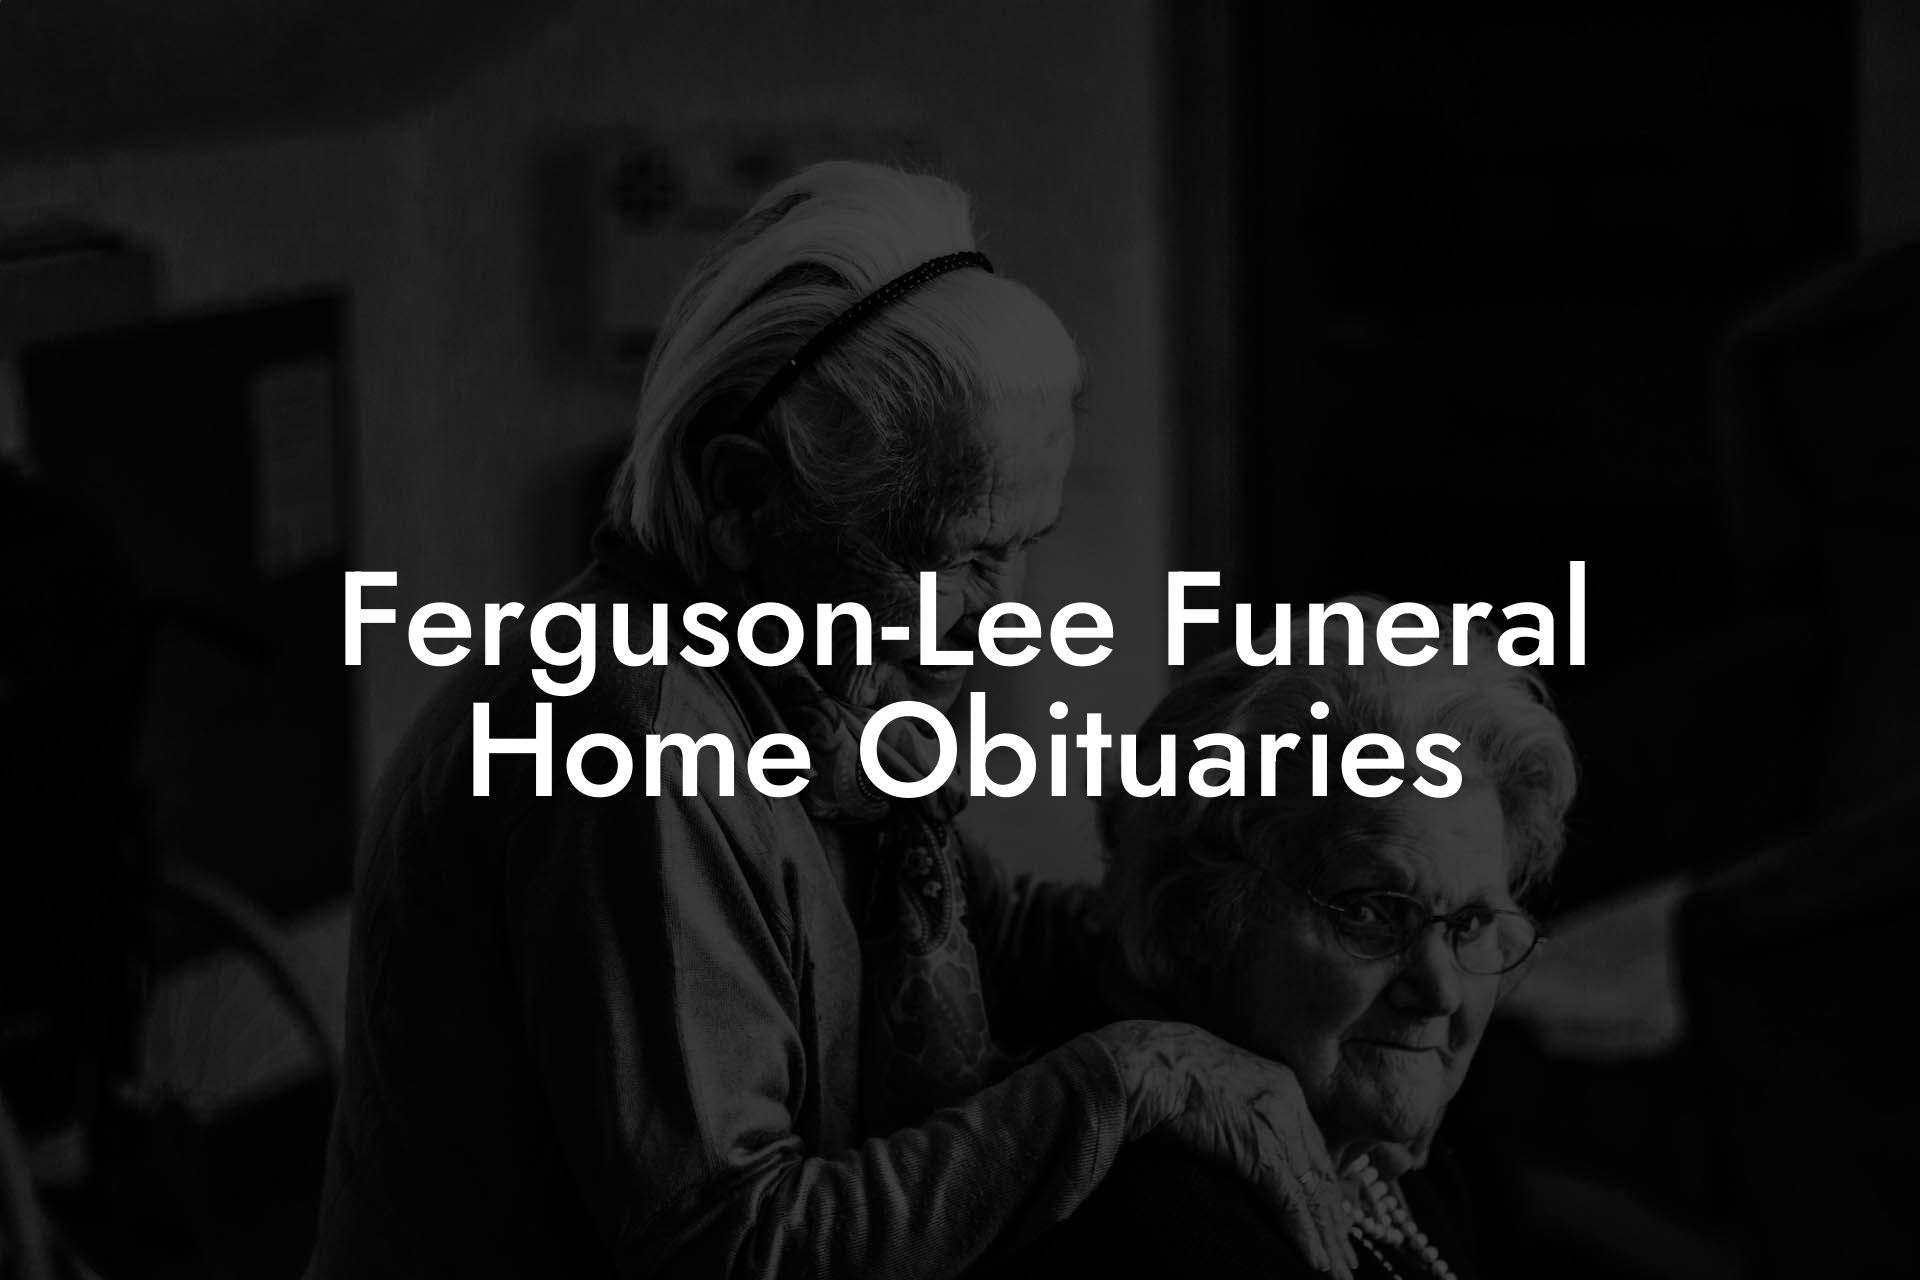 Ferguson-Lee Funeral Home Obituaries